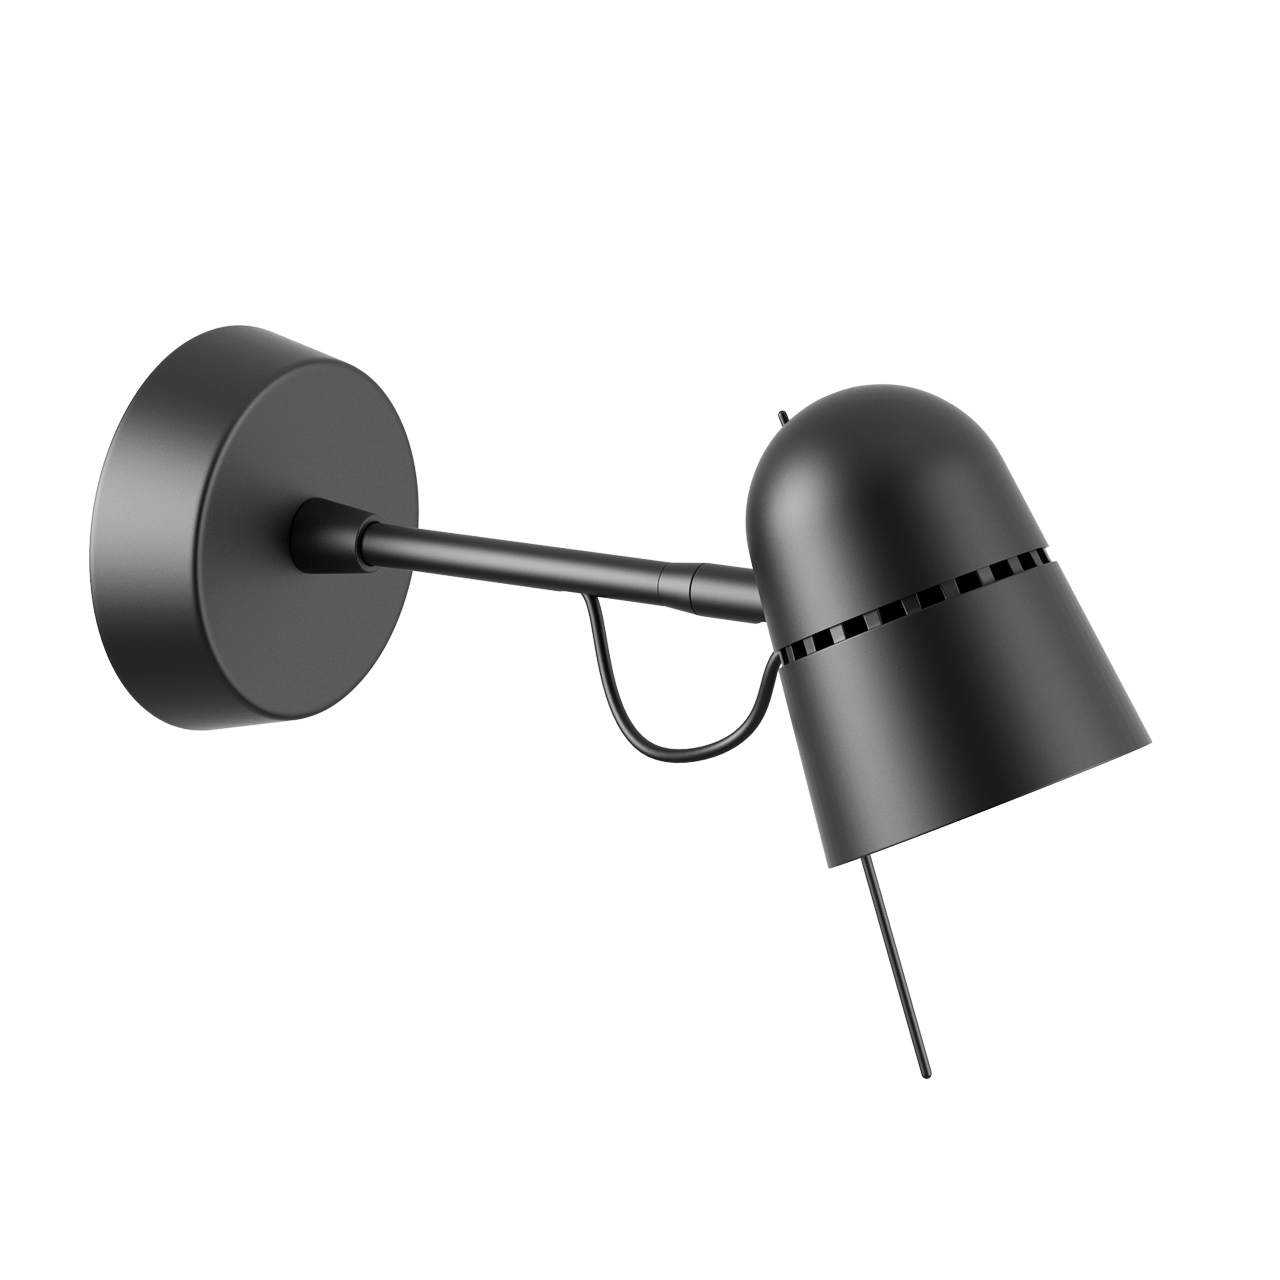 Counterbalance Wall Spot Lamp by Luceplan